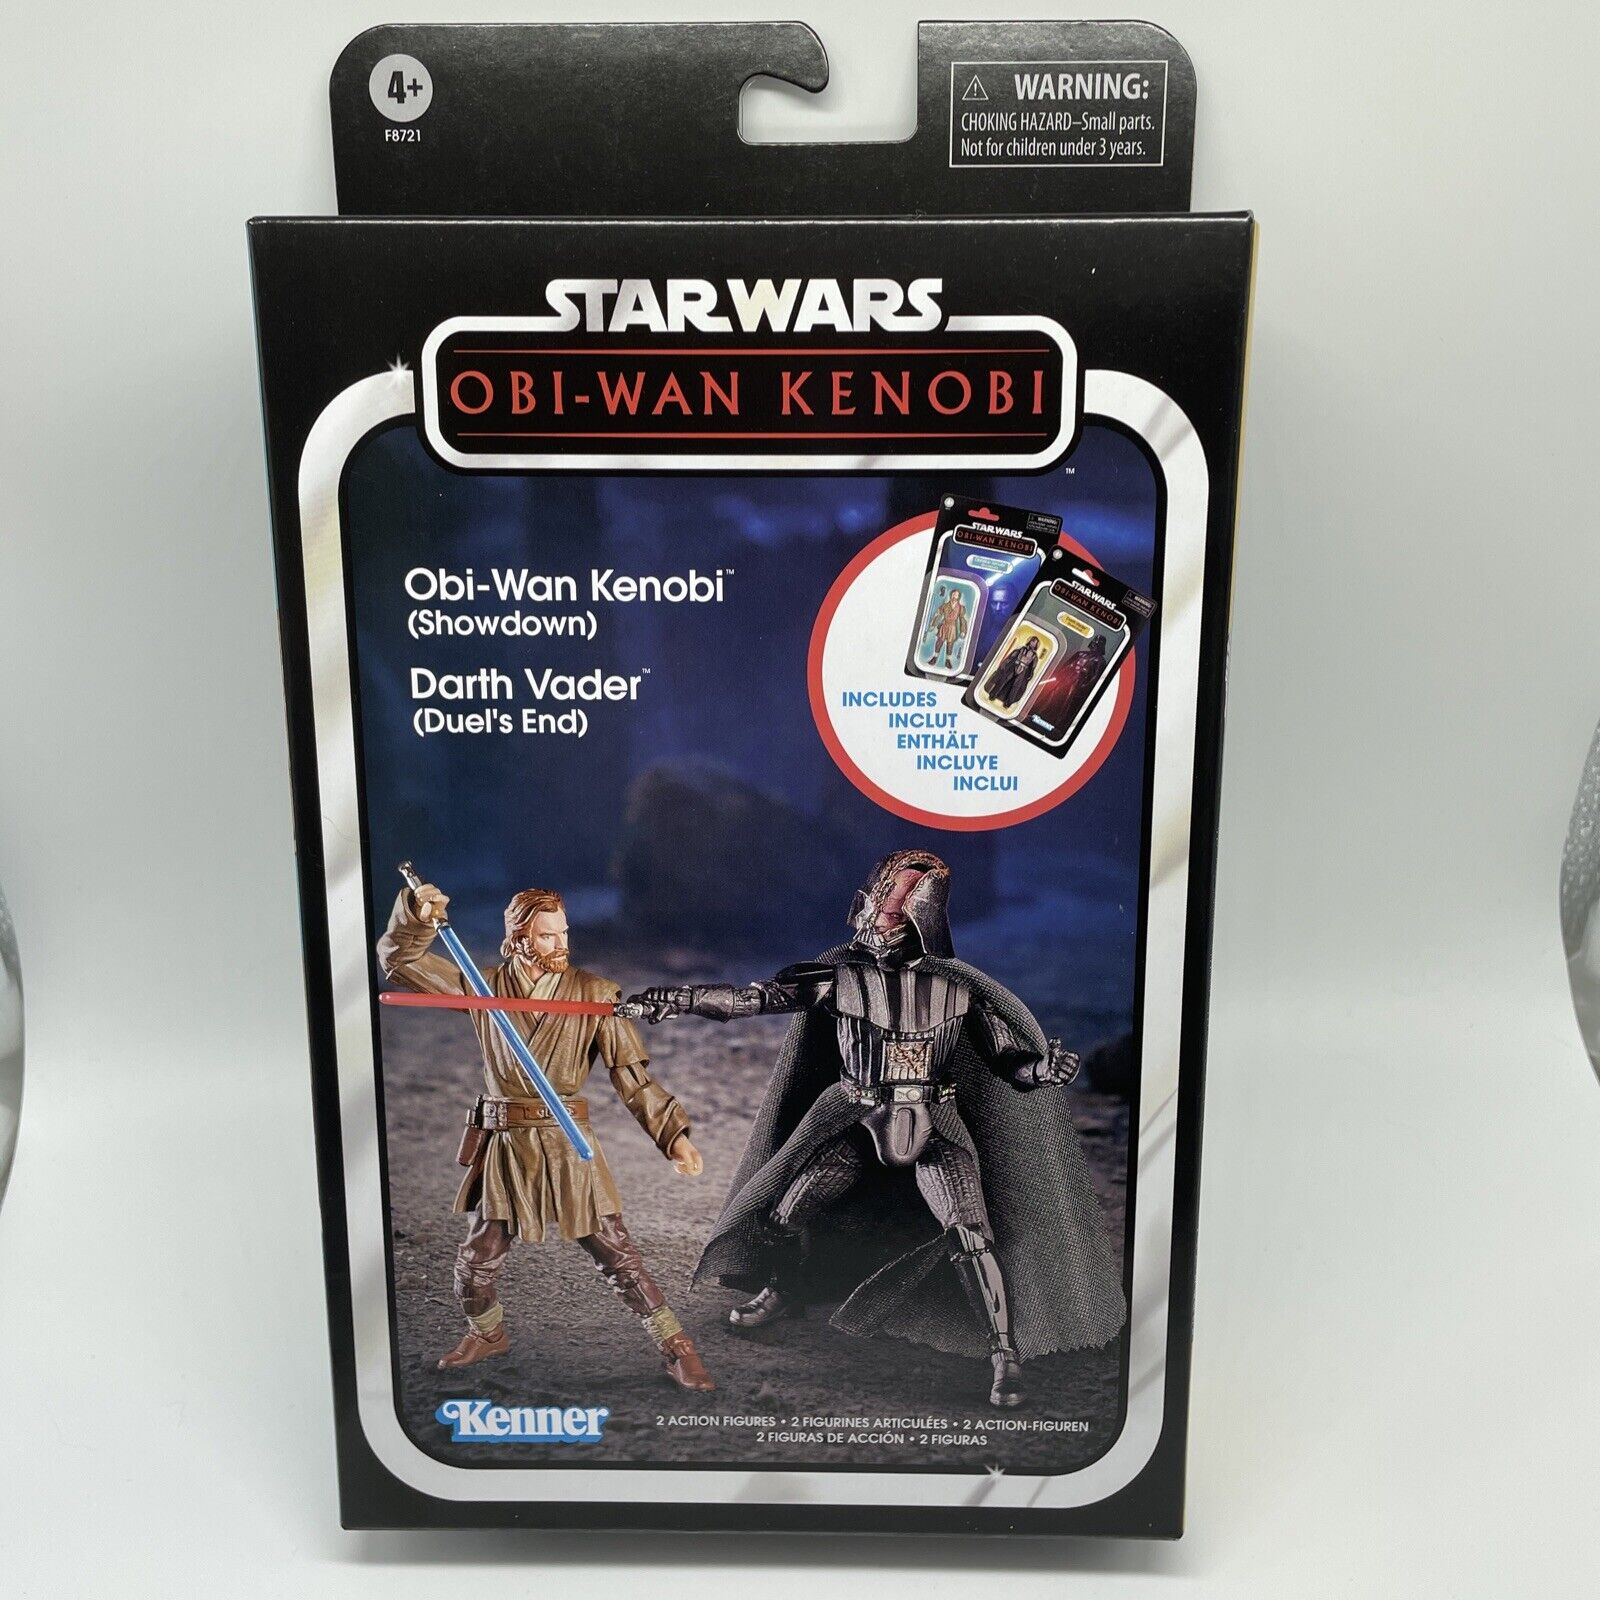 Hasbro Star Wars The Vintage Collection - Obi-Wan Kenobi 2-Pack Action Figure